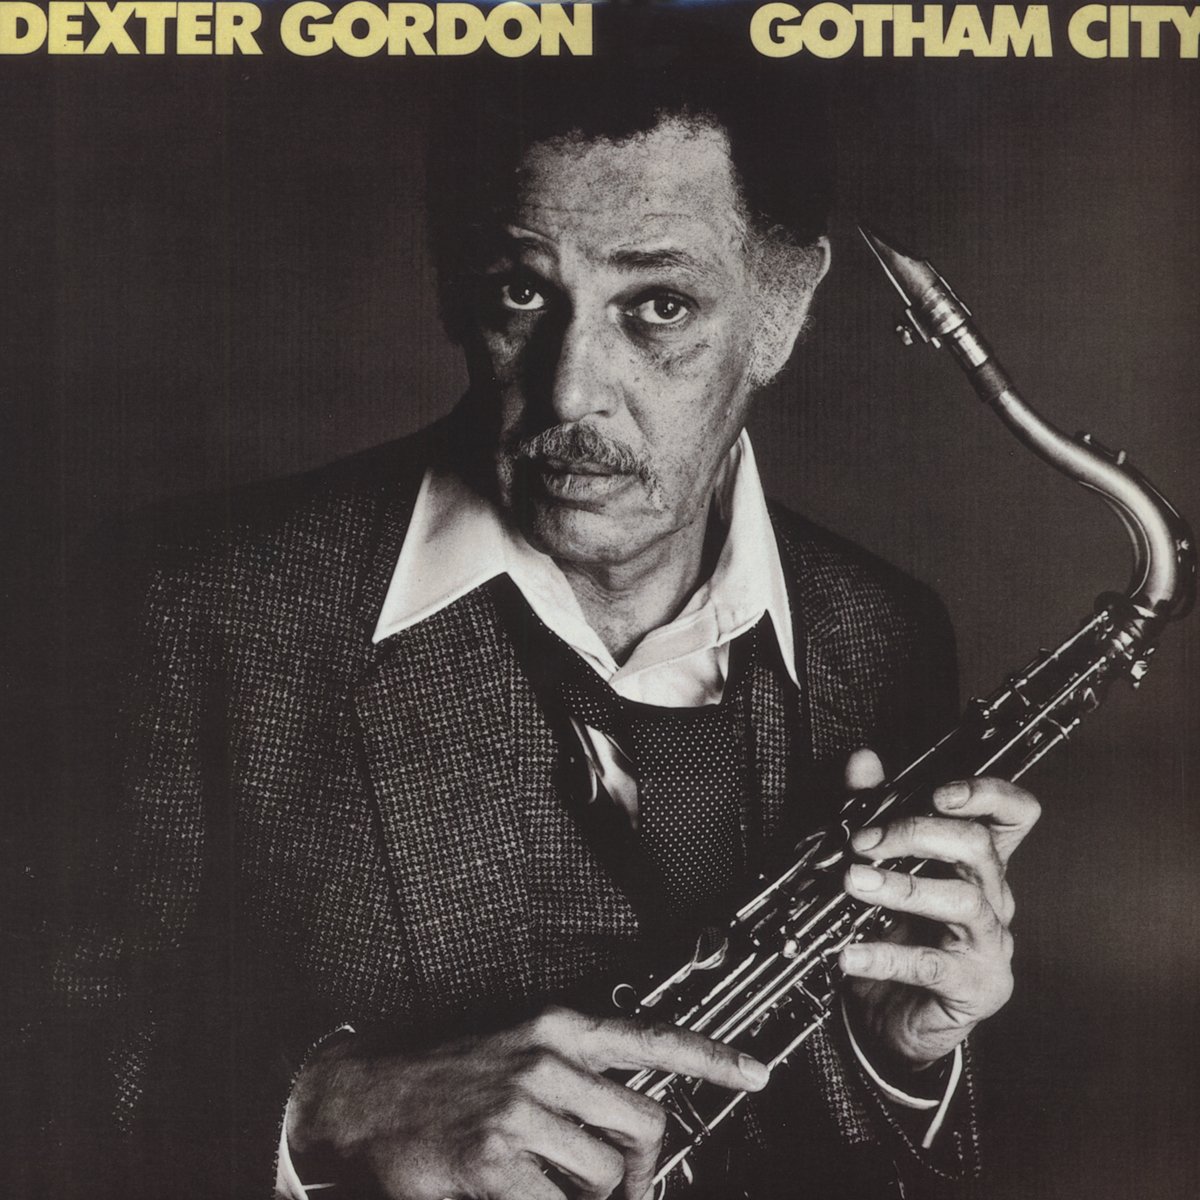 Dexter Gordon by Richard AvedonGotham City, 1981